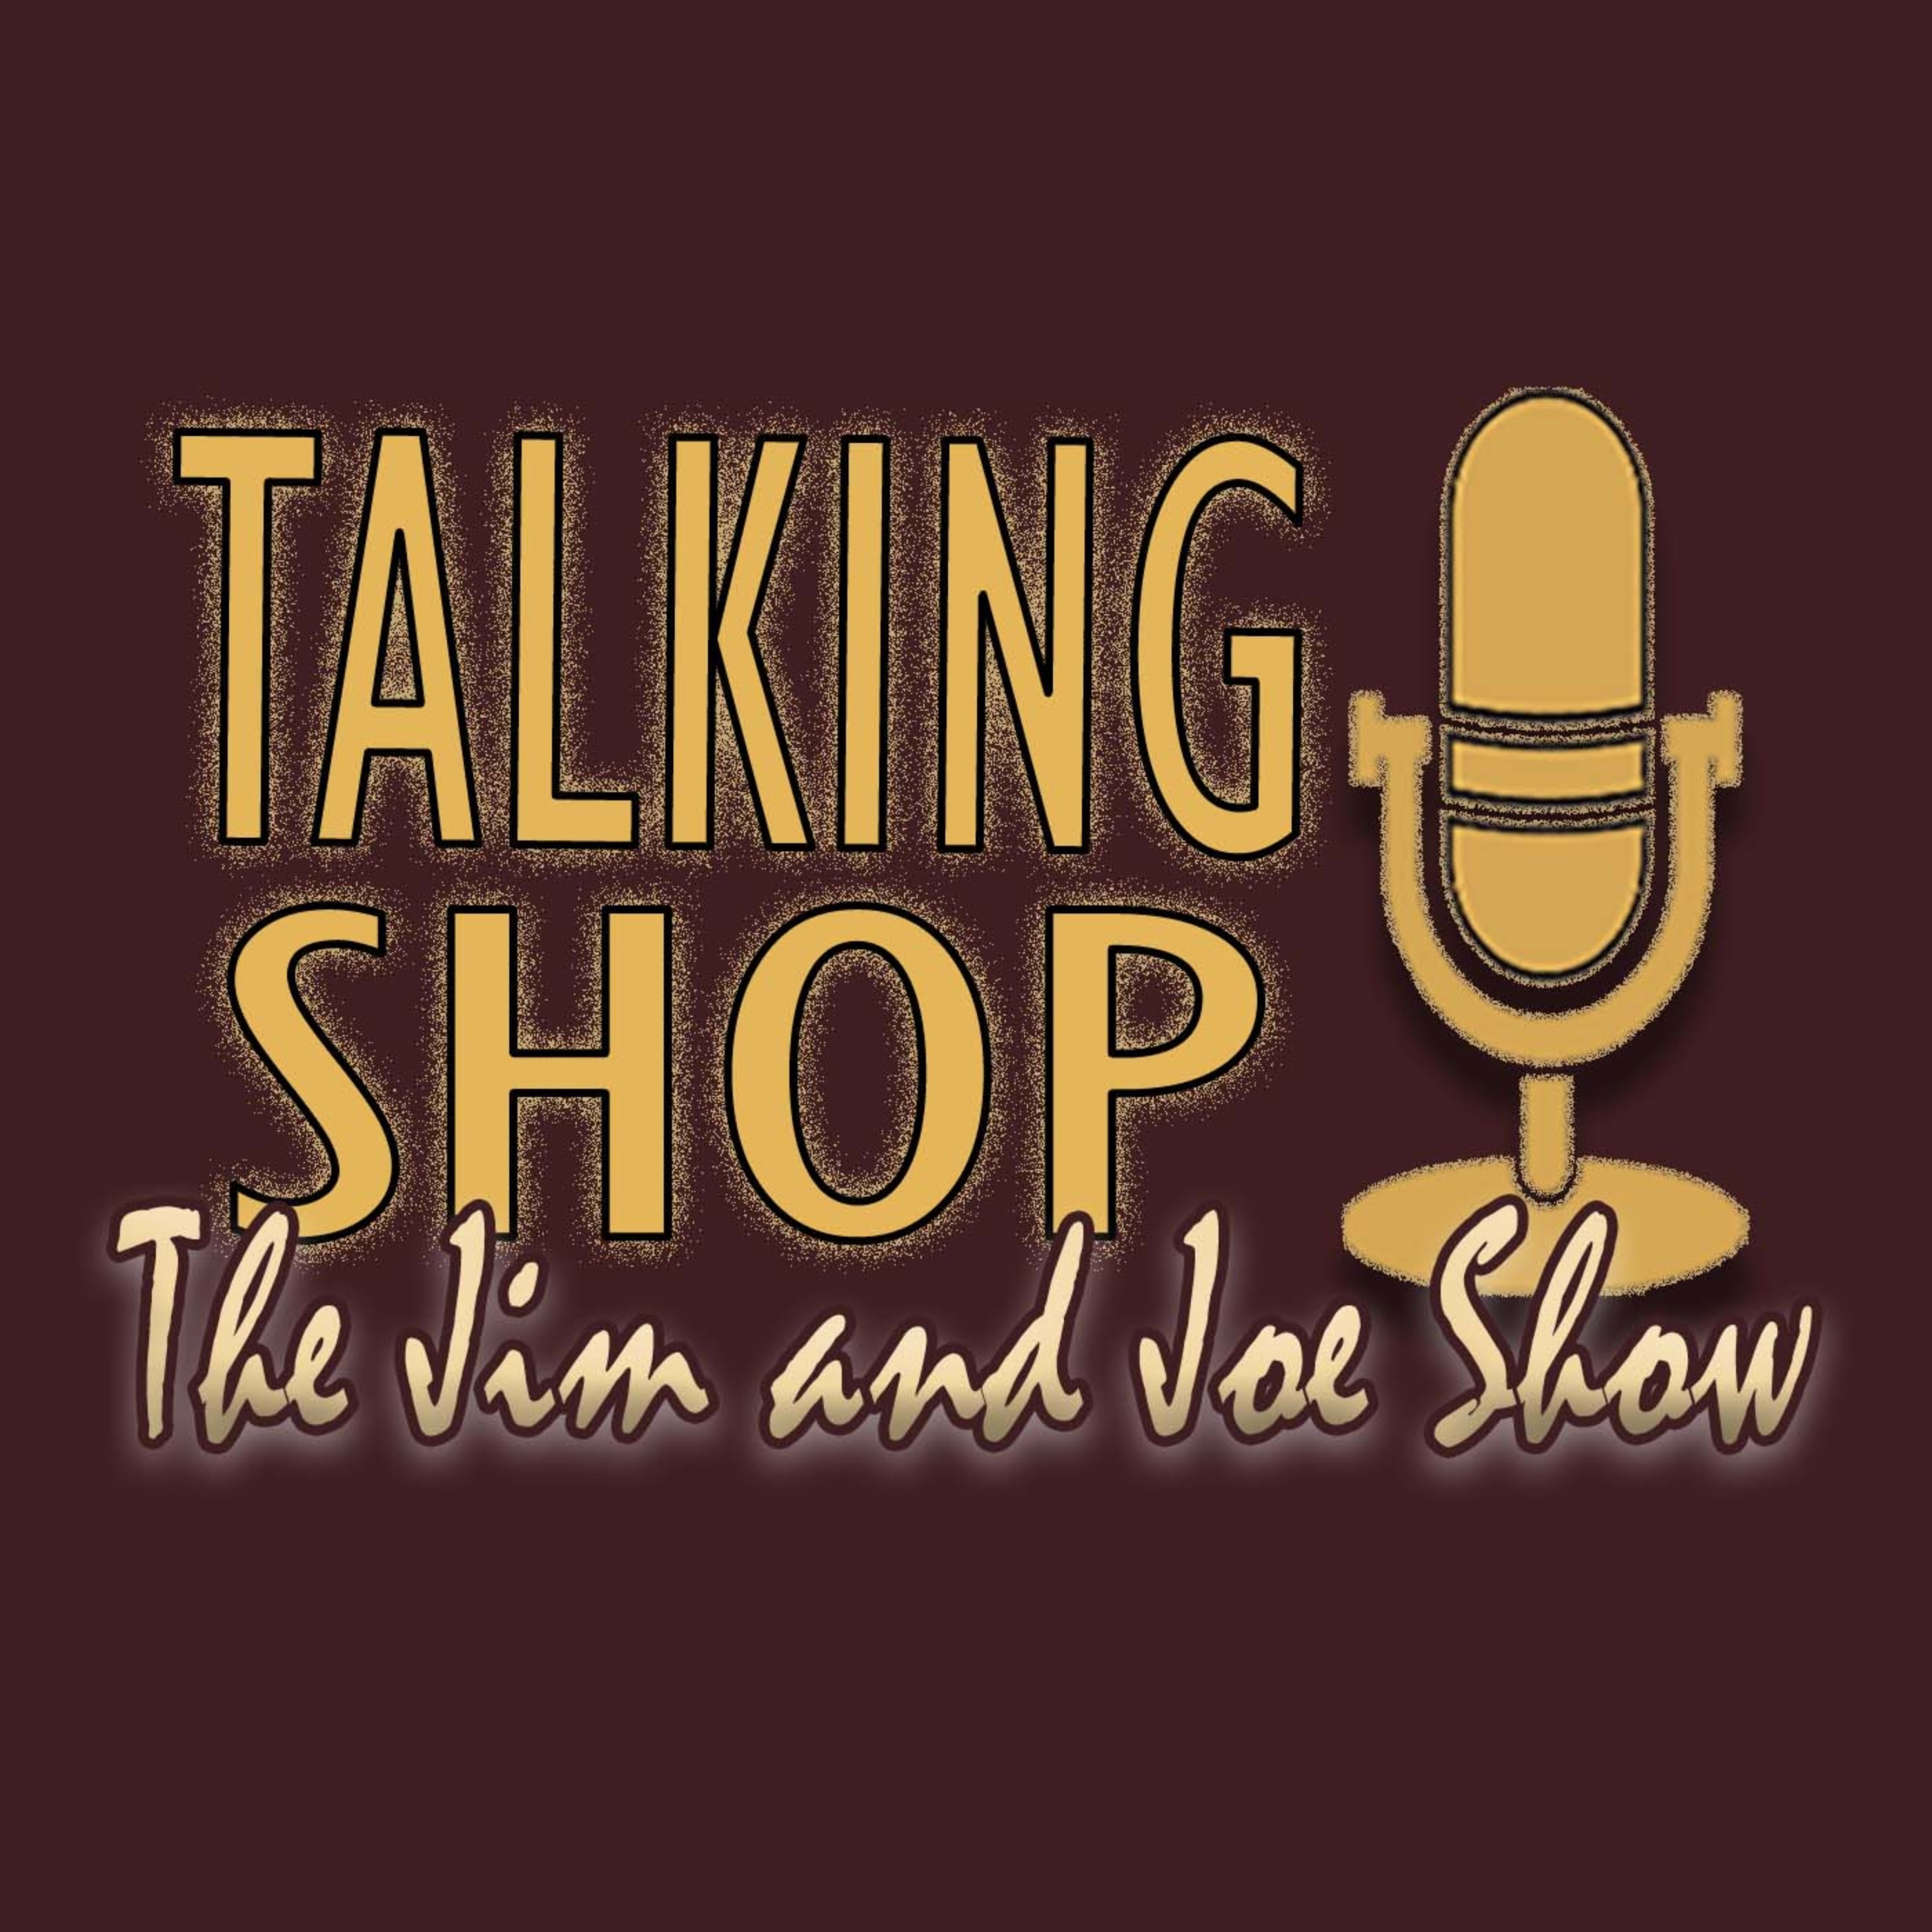 Talking Shop: The Jim and Joe Show